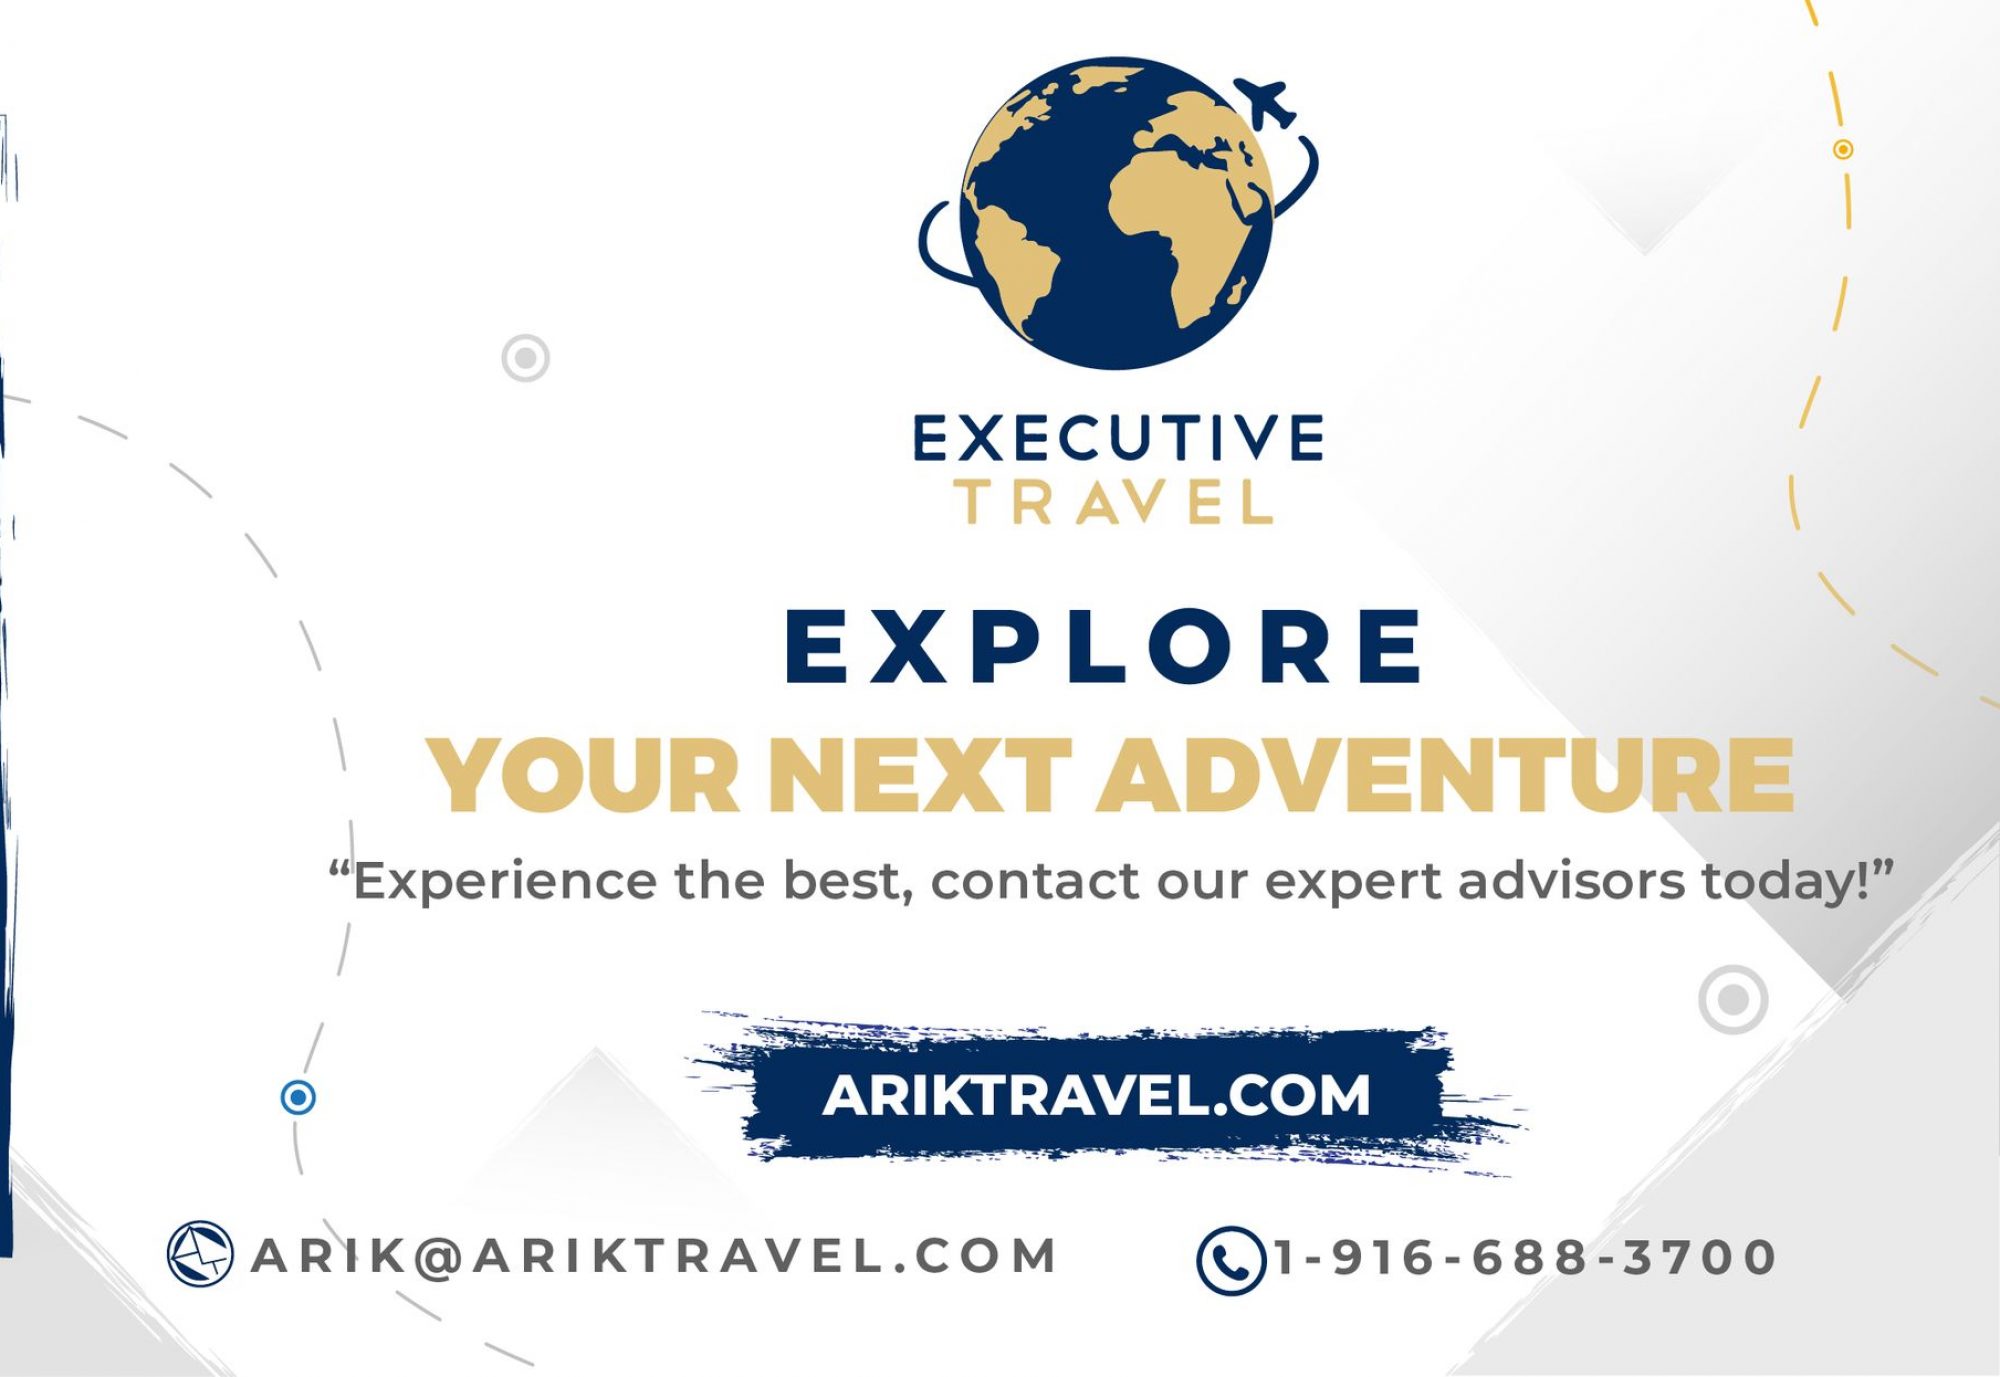 Arik Anderson Executive Travel Center - Ariktravel - Onlycabotours